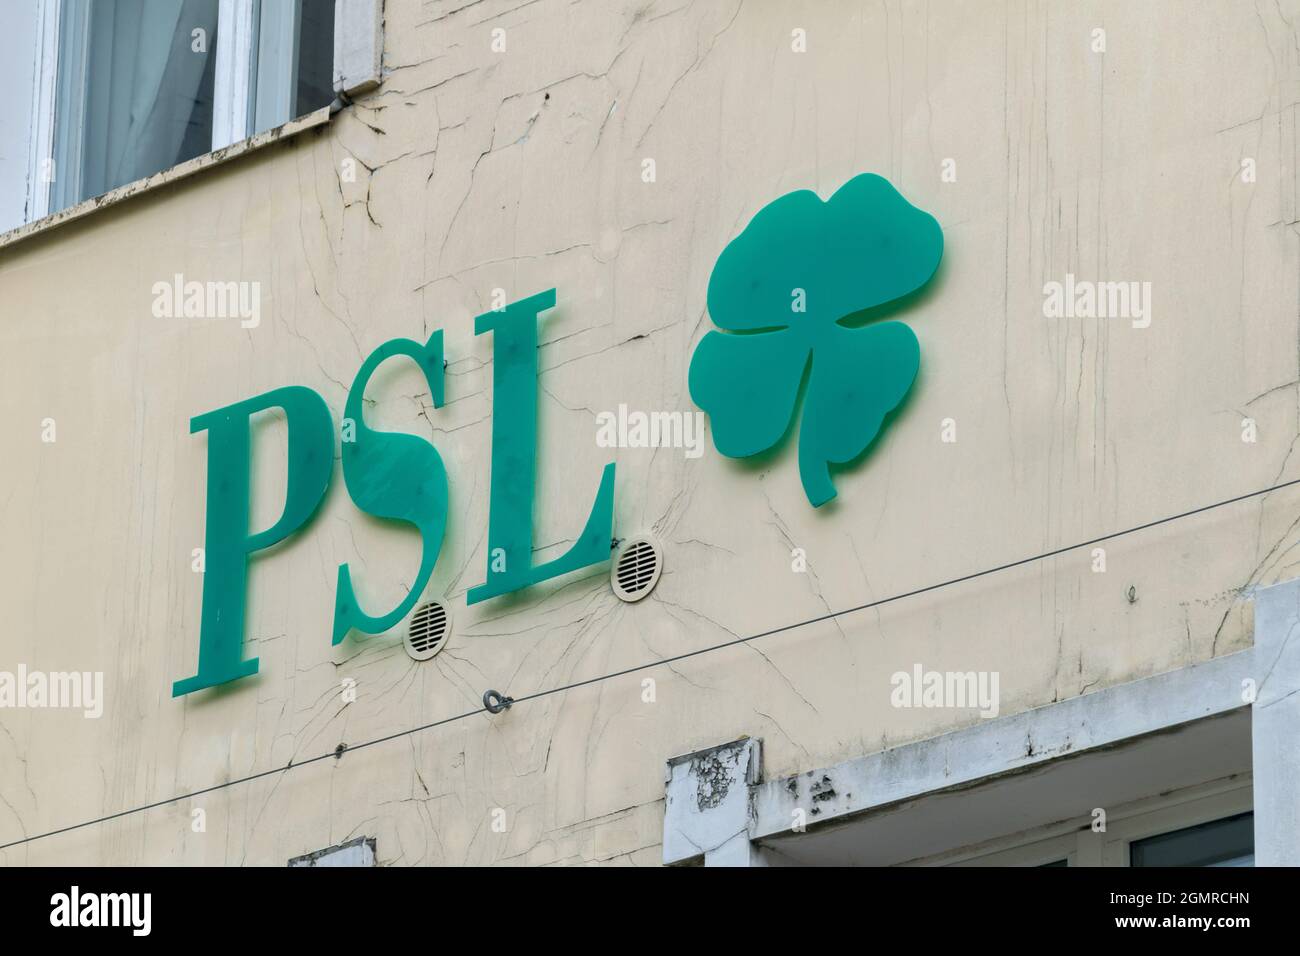 Zielona Gora, Poland - June 1, 2021: Sign and logo of PSL. PSL is Polish People's Party (Polish: Polskie Stronnictwo Ludowe). Stock Photo